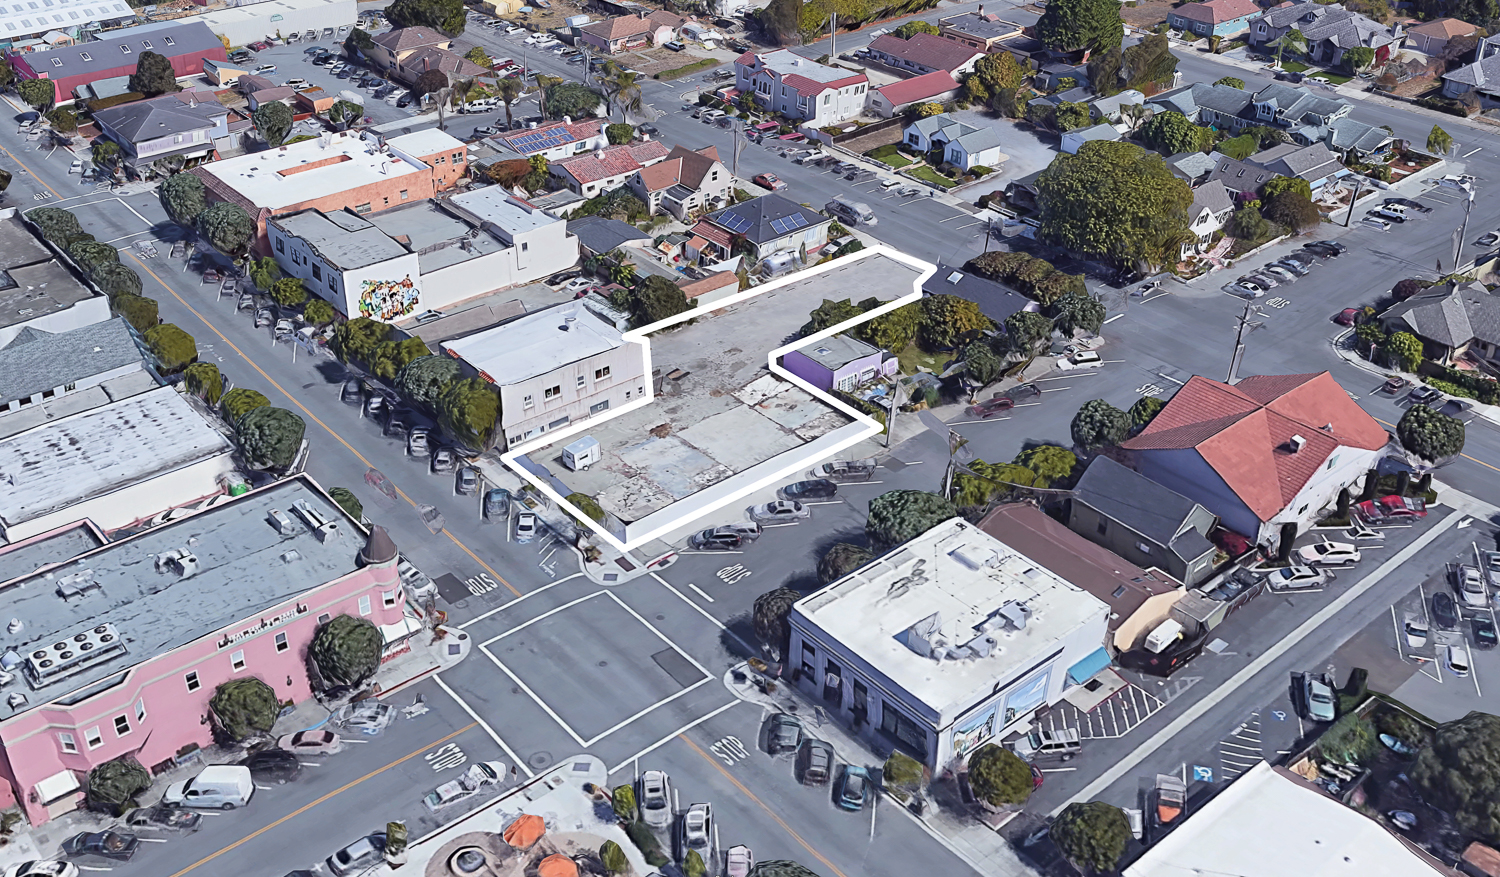 433 Main Street, image via Google Satellite